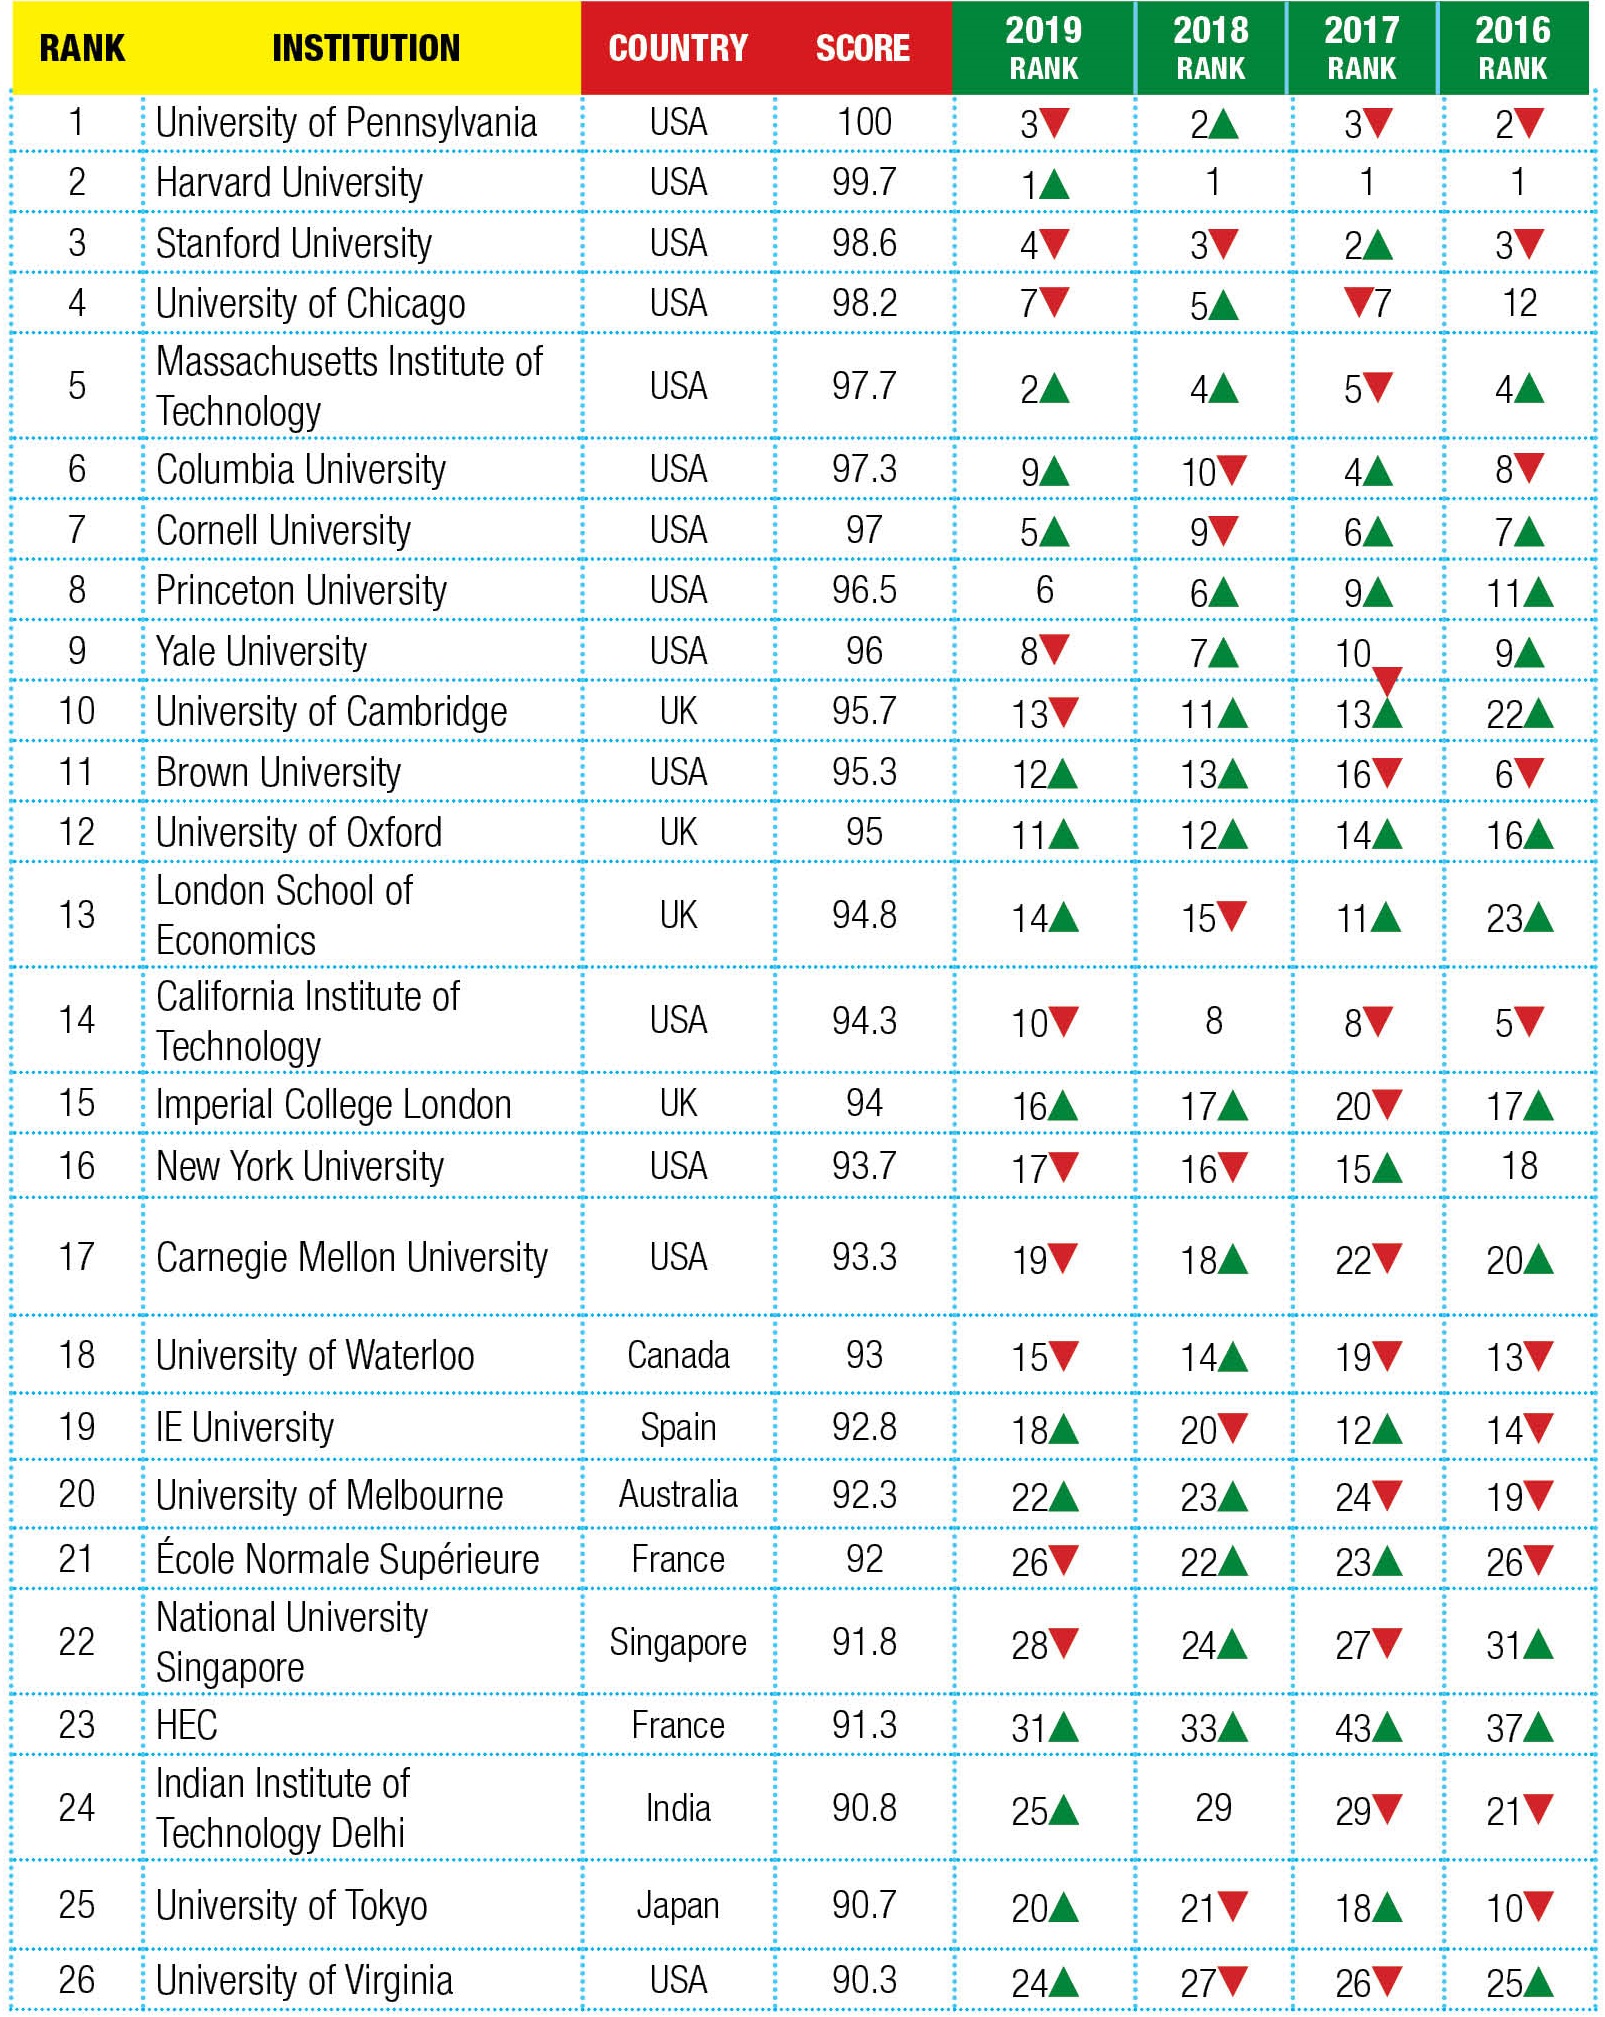 education major college ranking